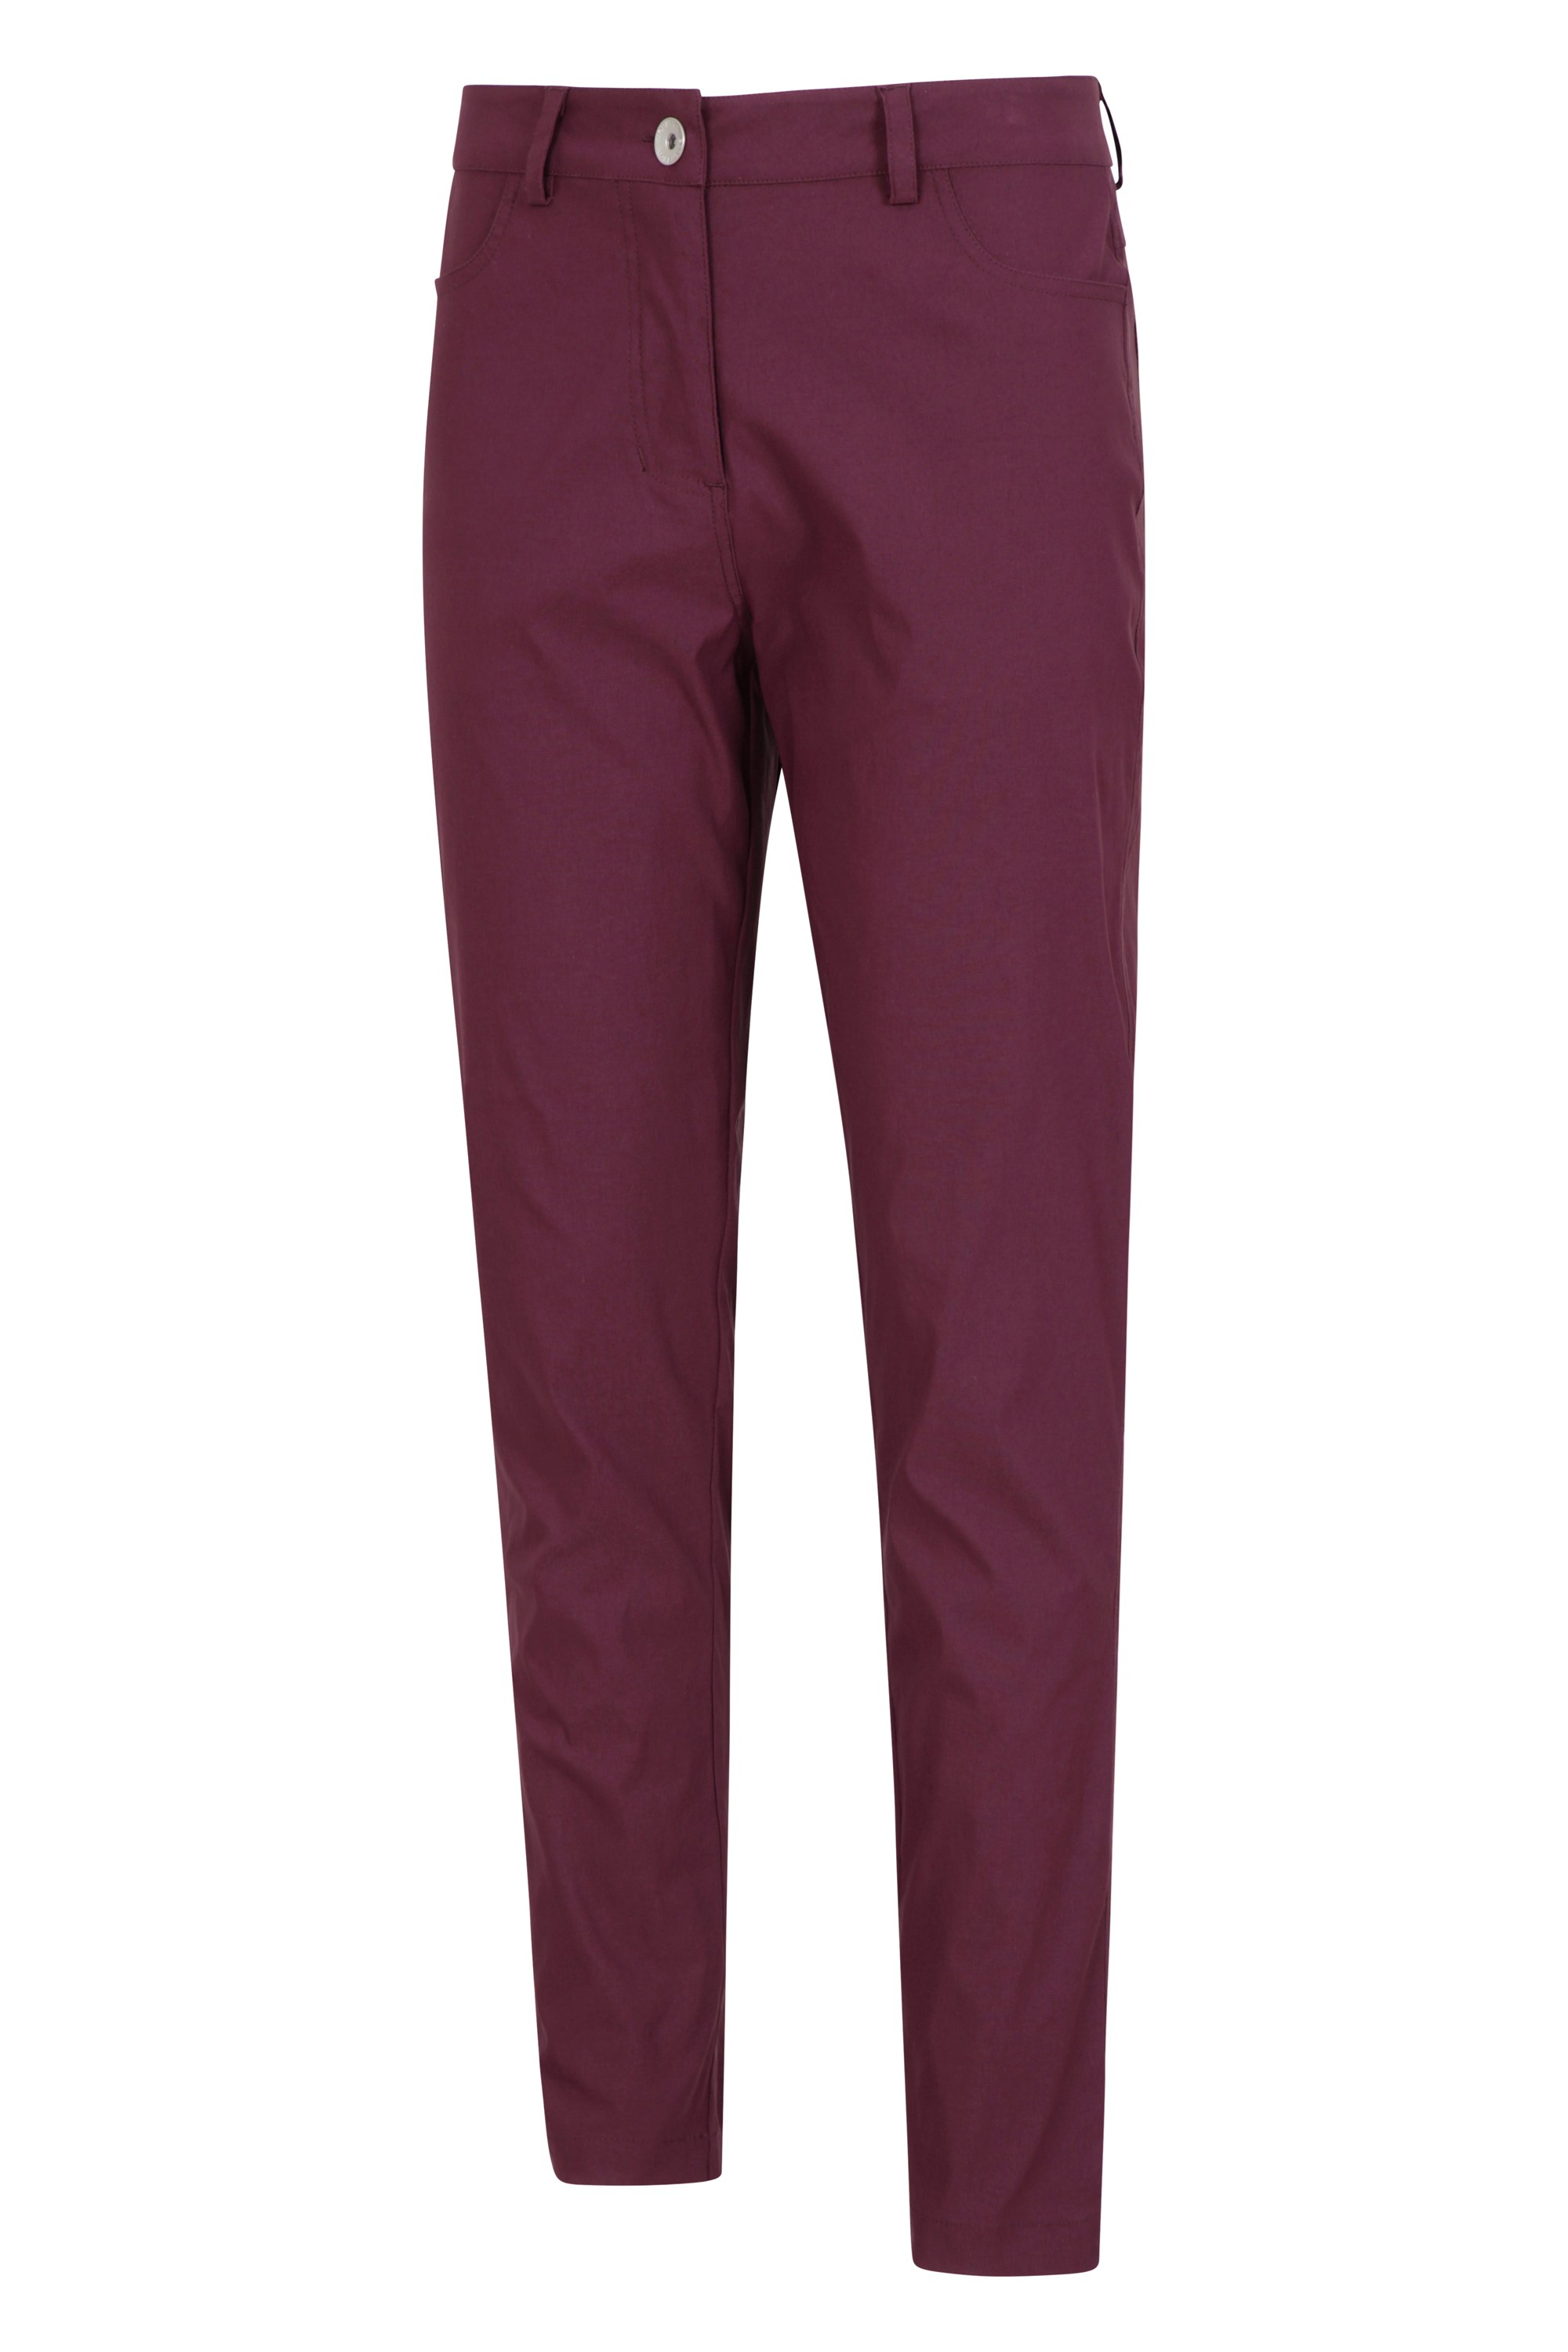 Monochrome leggings curvy in burgundy, 7.99€